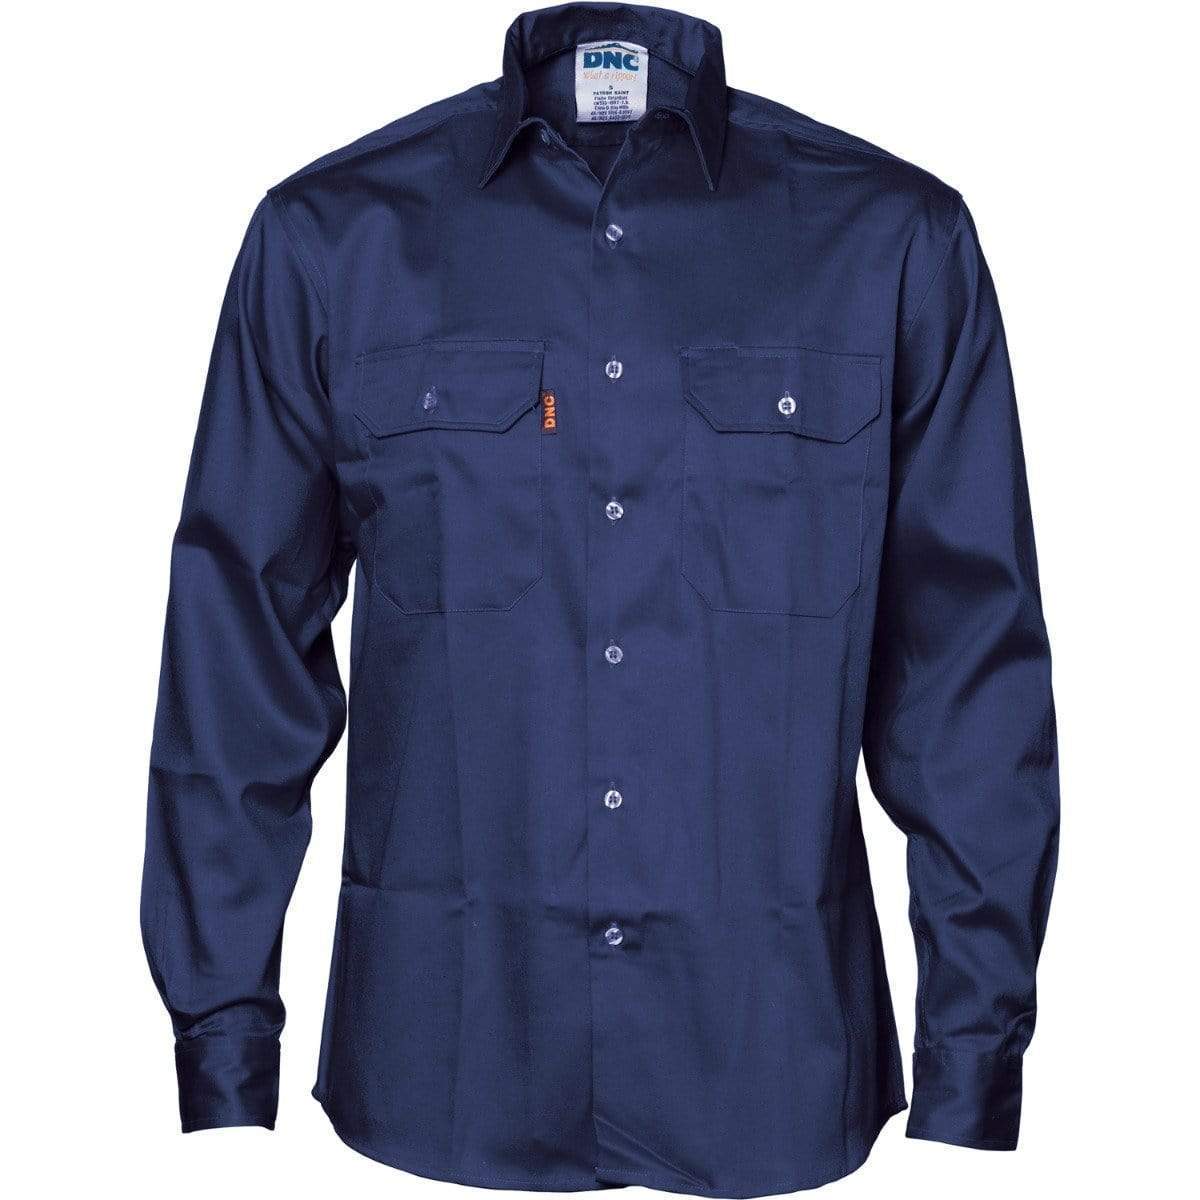 Dnc Workwear Patron Saint Flame Retardant Long Sleeve Drill Shirt - 3402 Work Wear DNC Workwear Navy S 